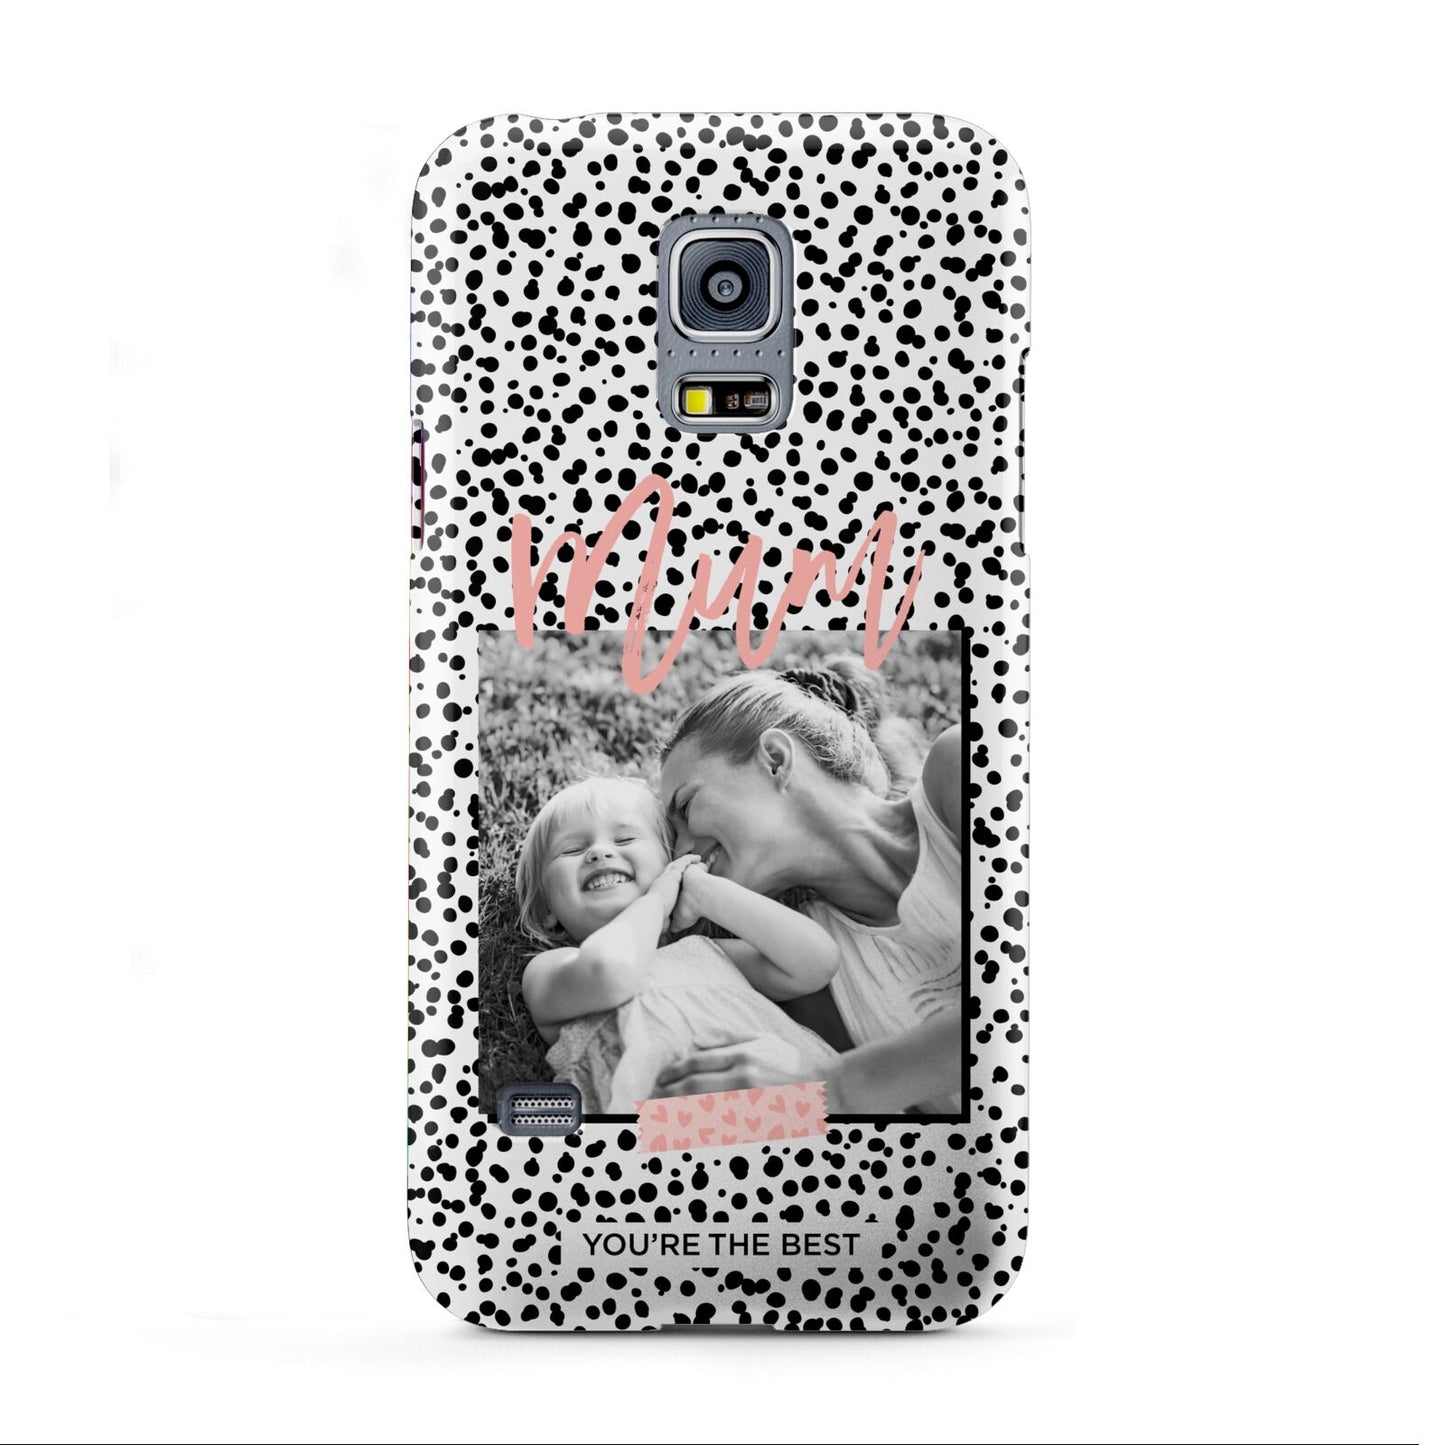 Polka Dot Mum Samsung Galaxy S5 Mini Case